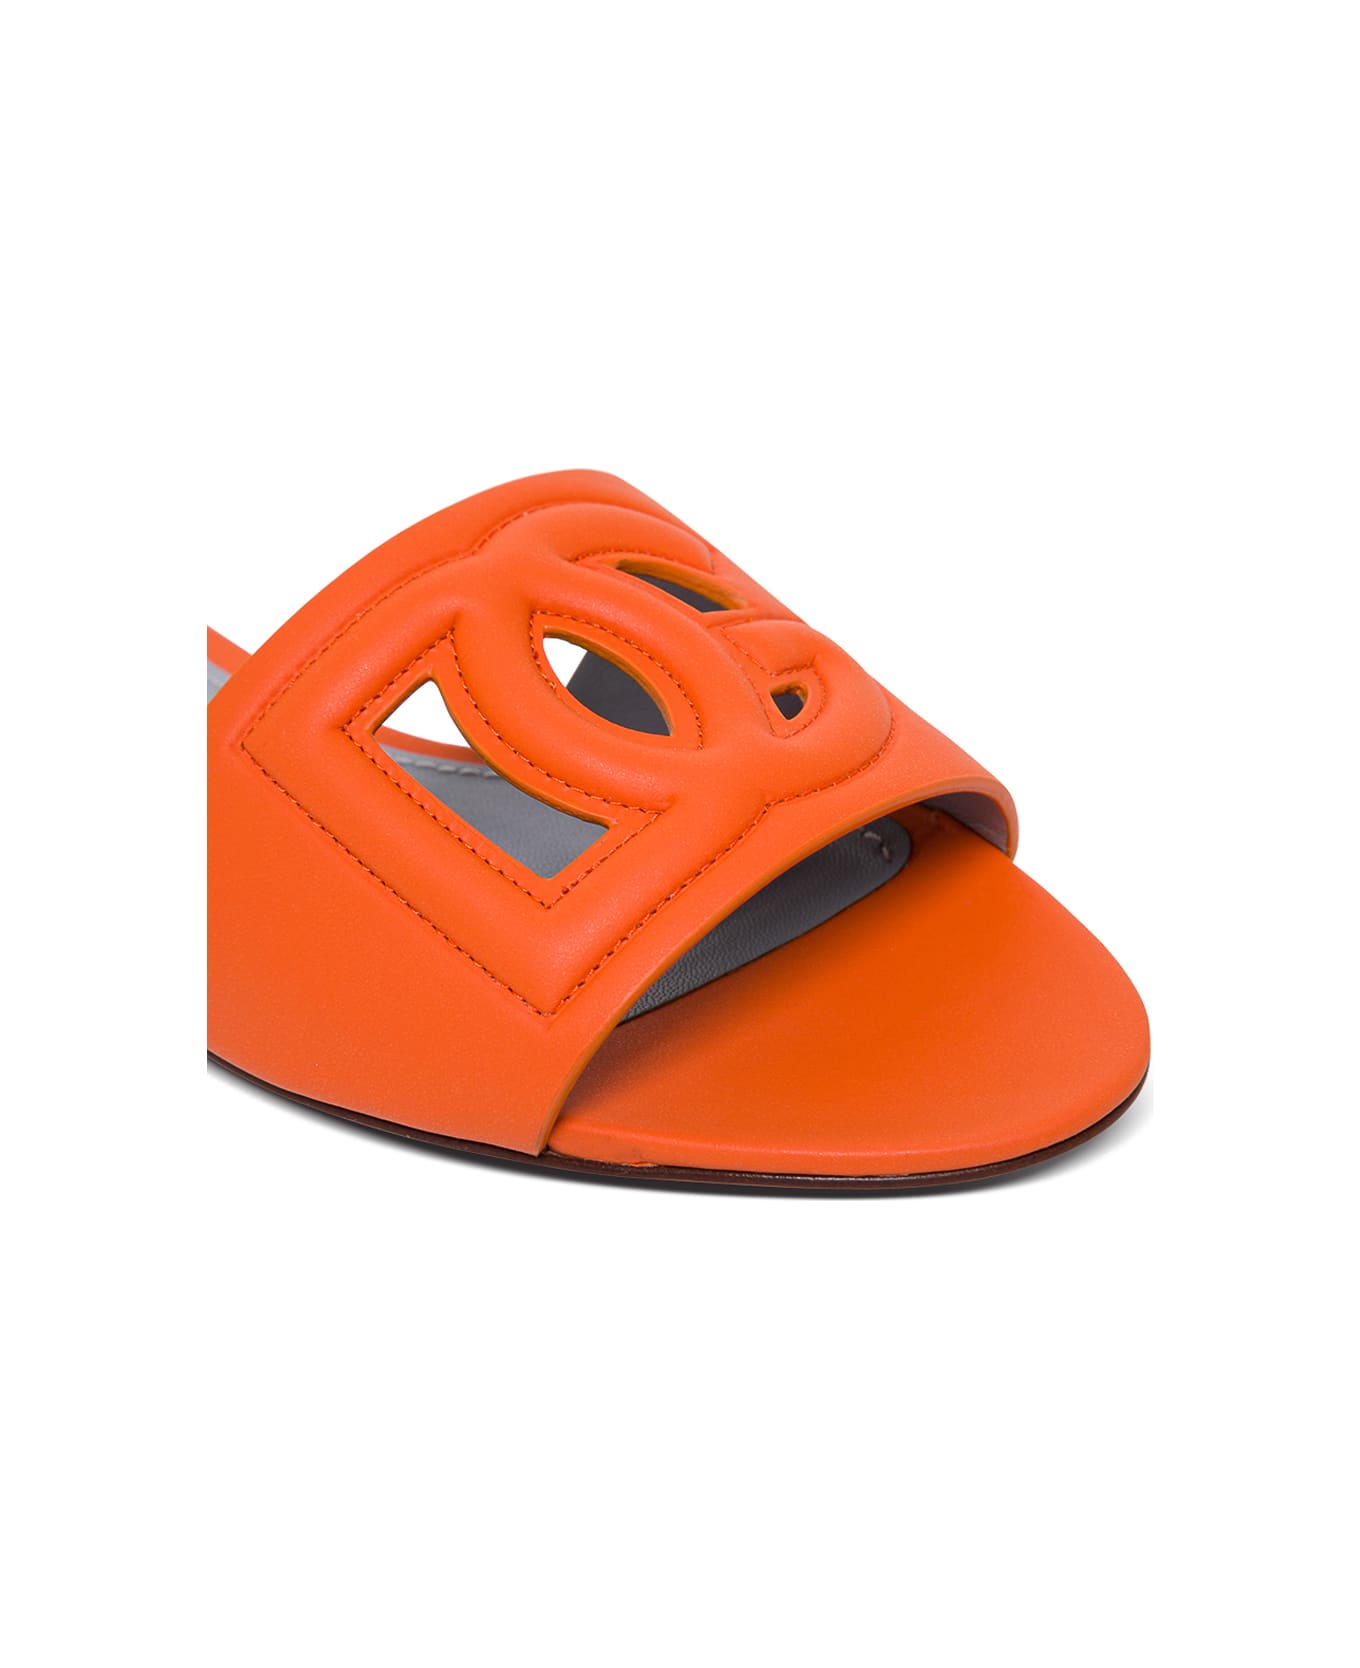 Dolce & Gabbana Slide Sandals In Orange Leather With Logo - Orange サンダル